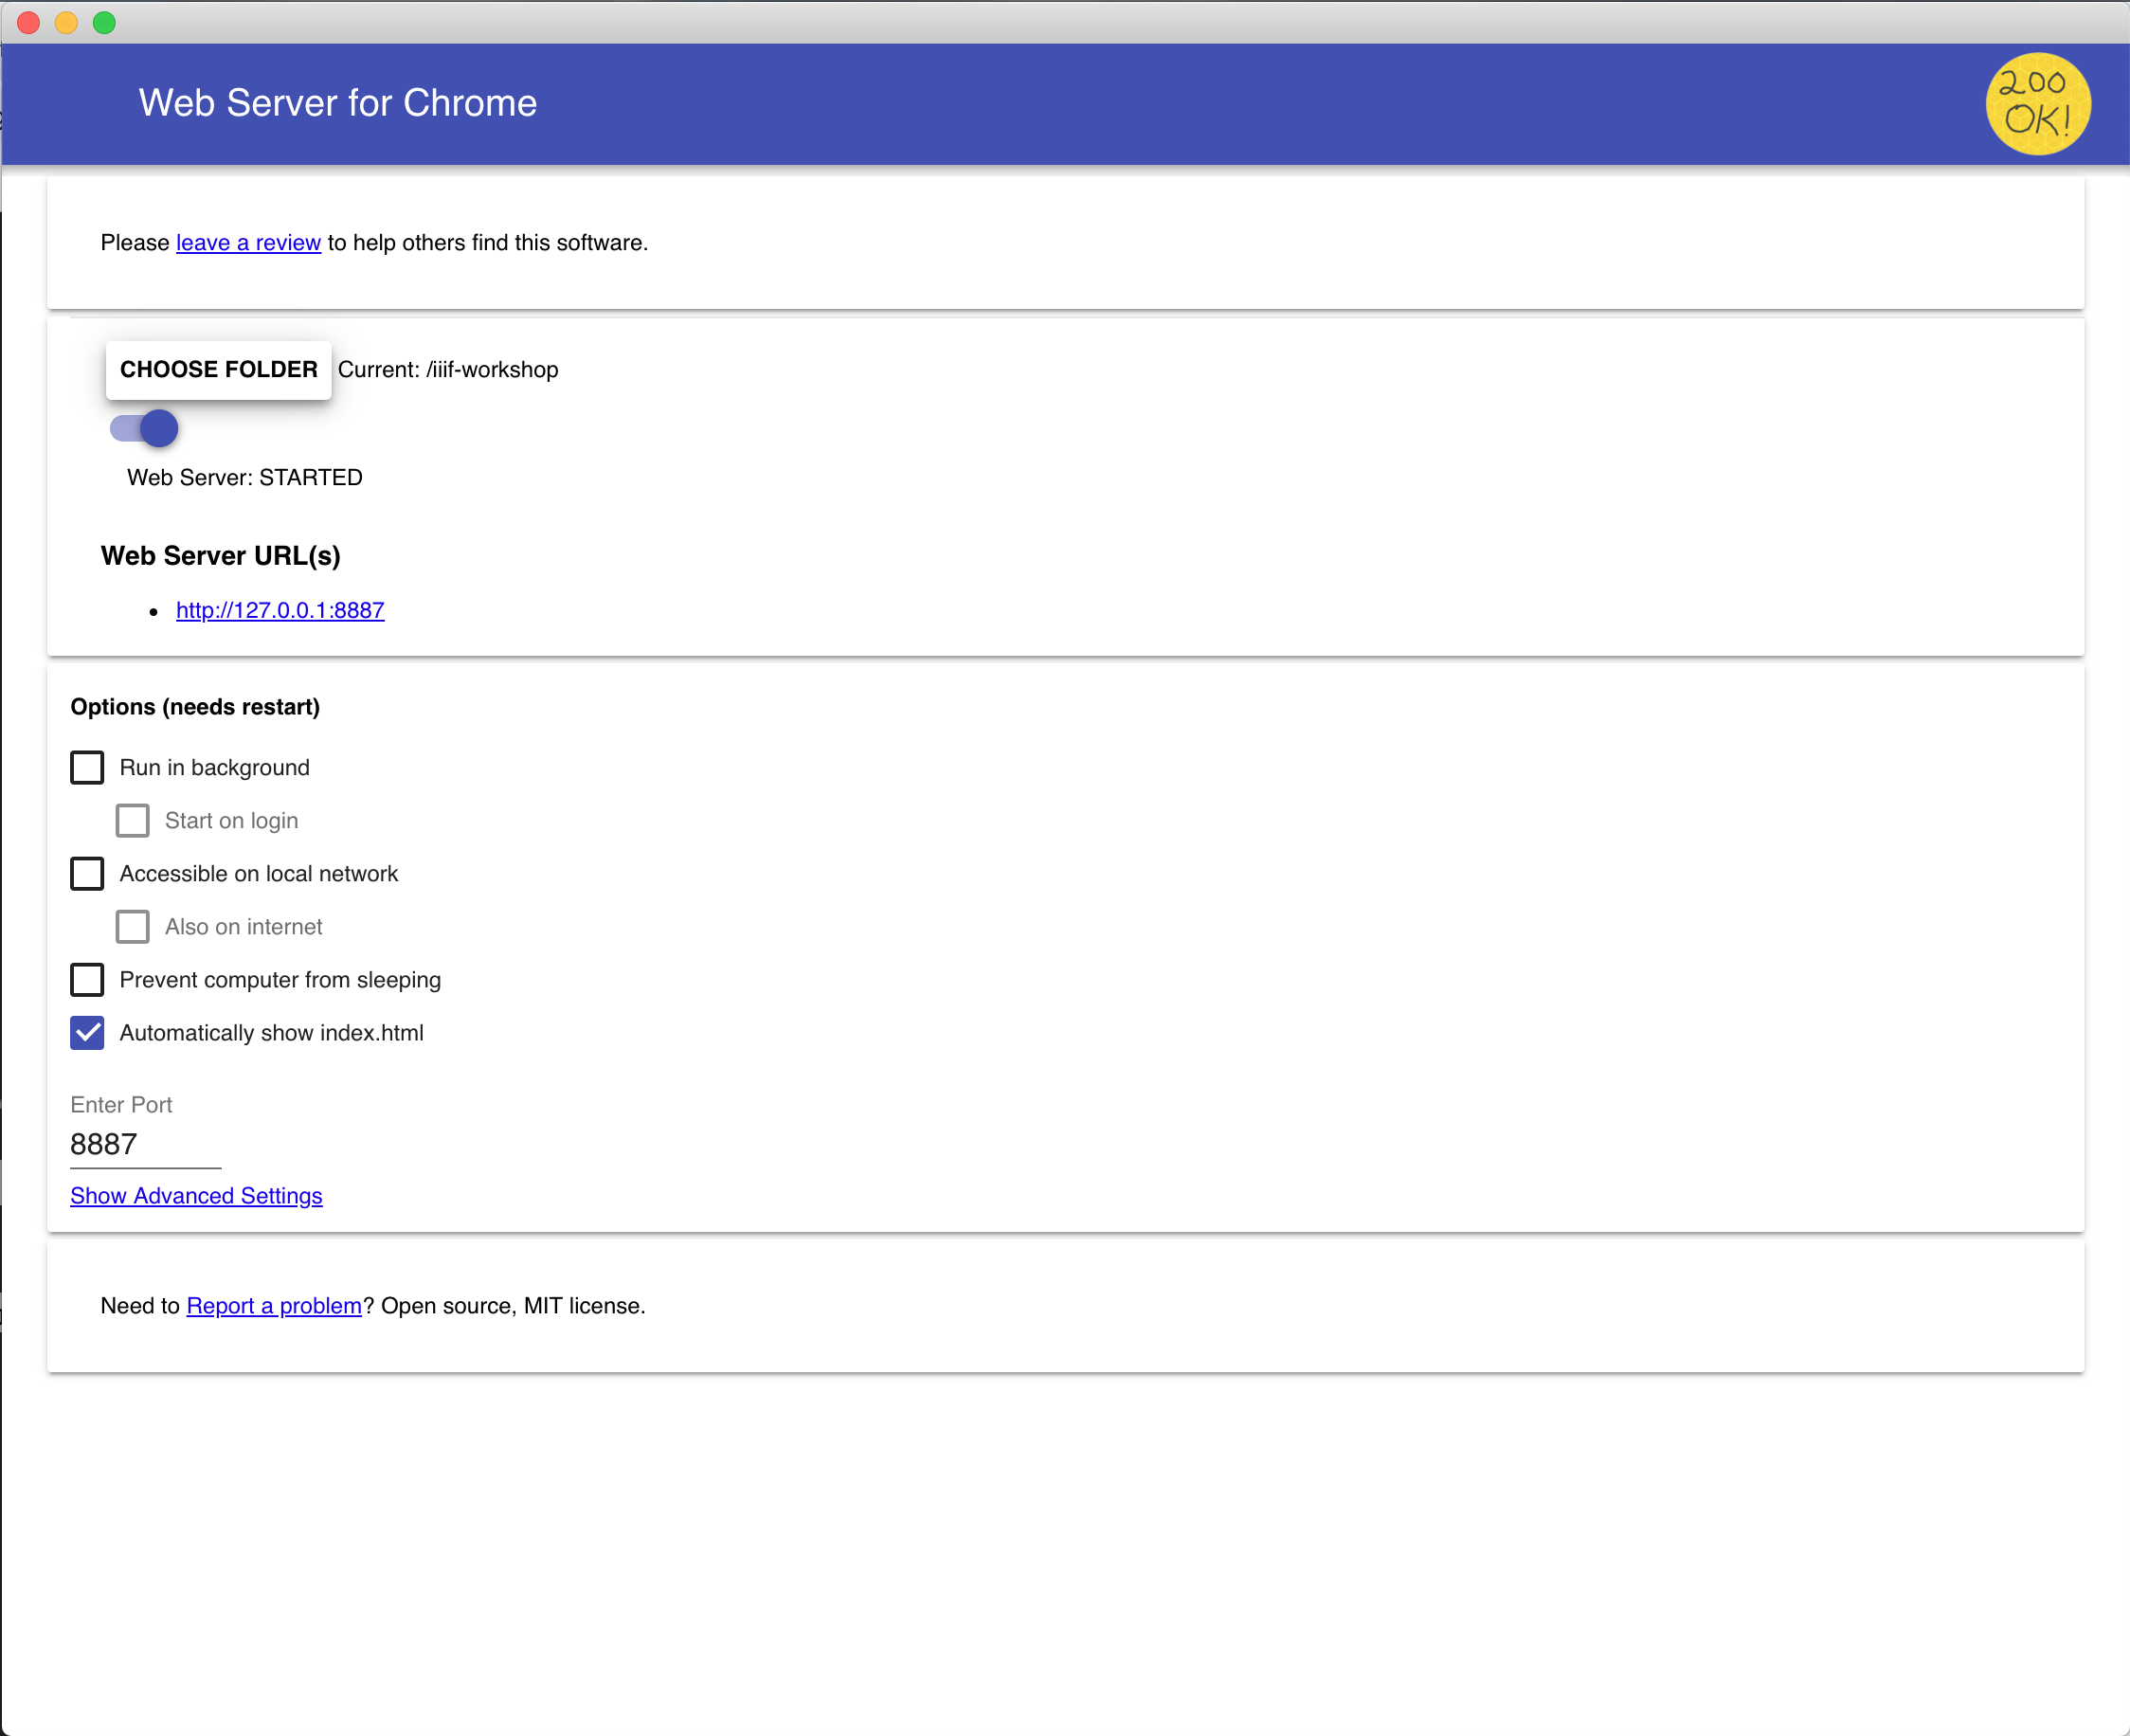 Image of Web Server for Chrome control panel